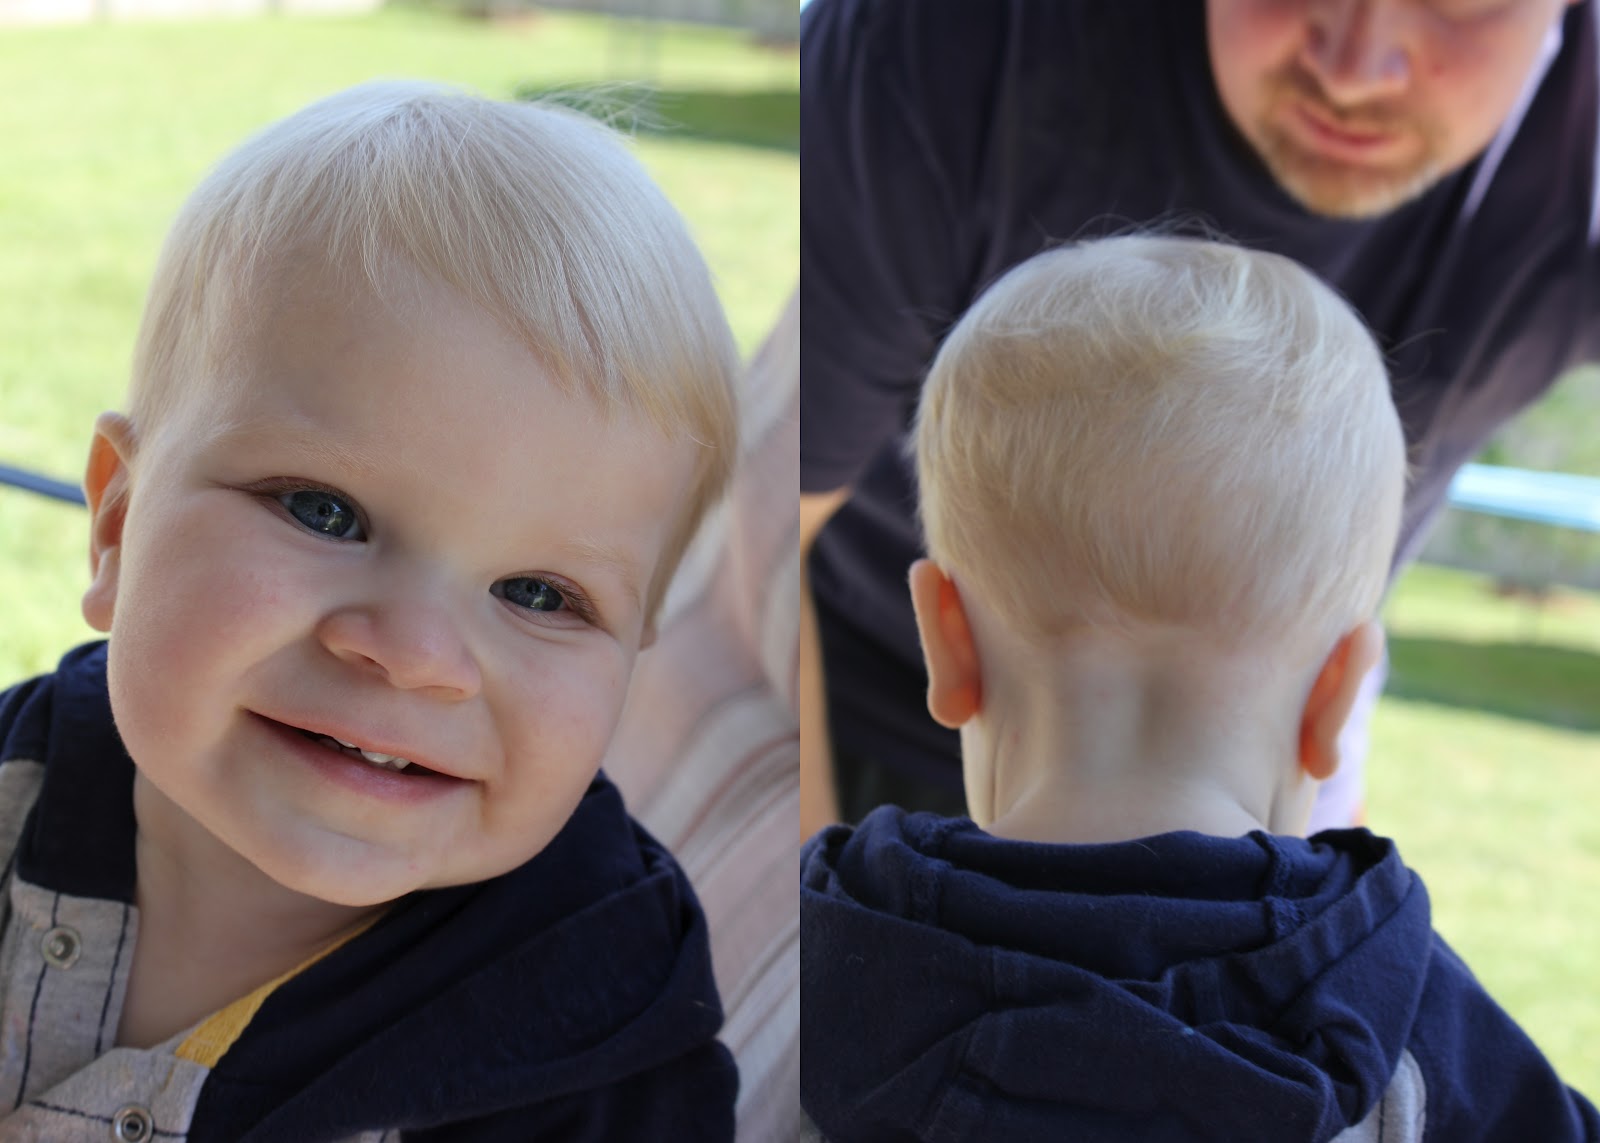 Richards Family Six: little boy's haircut